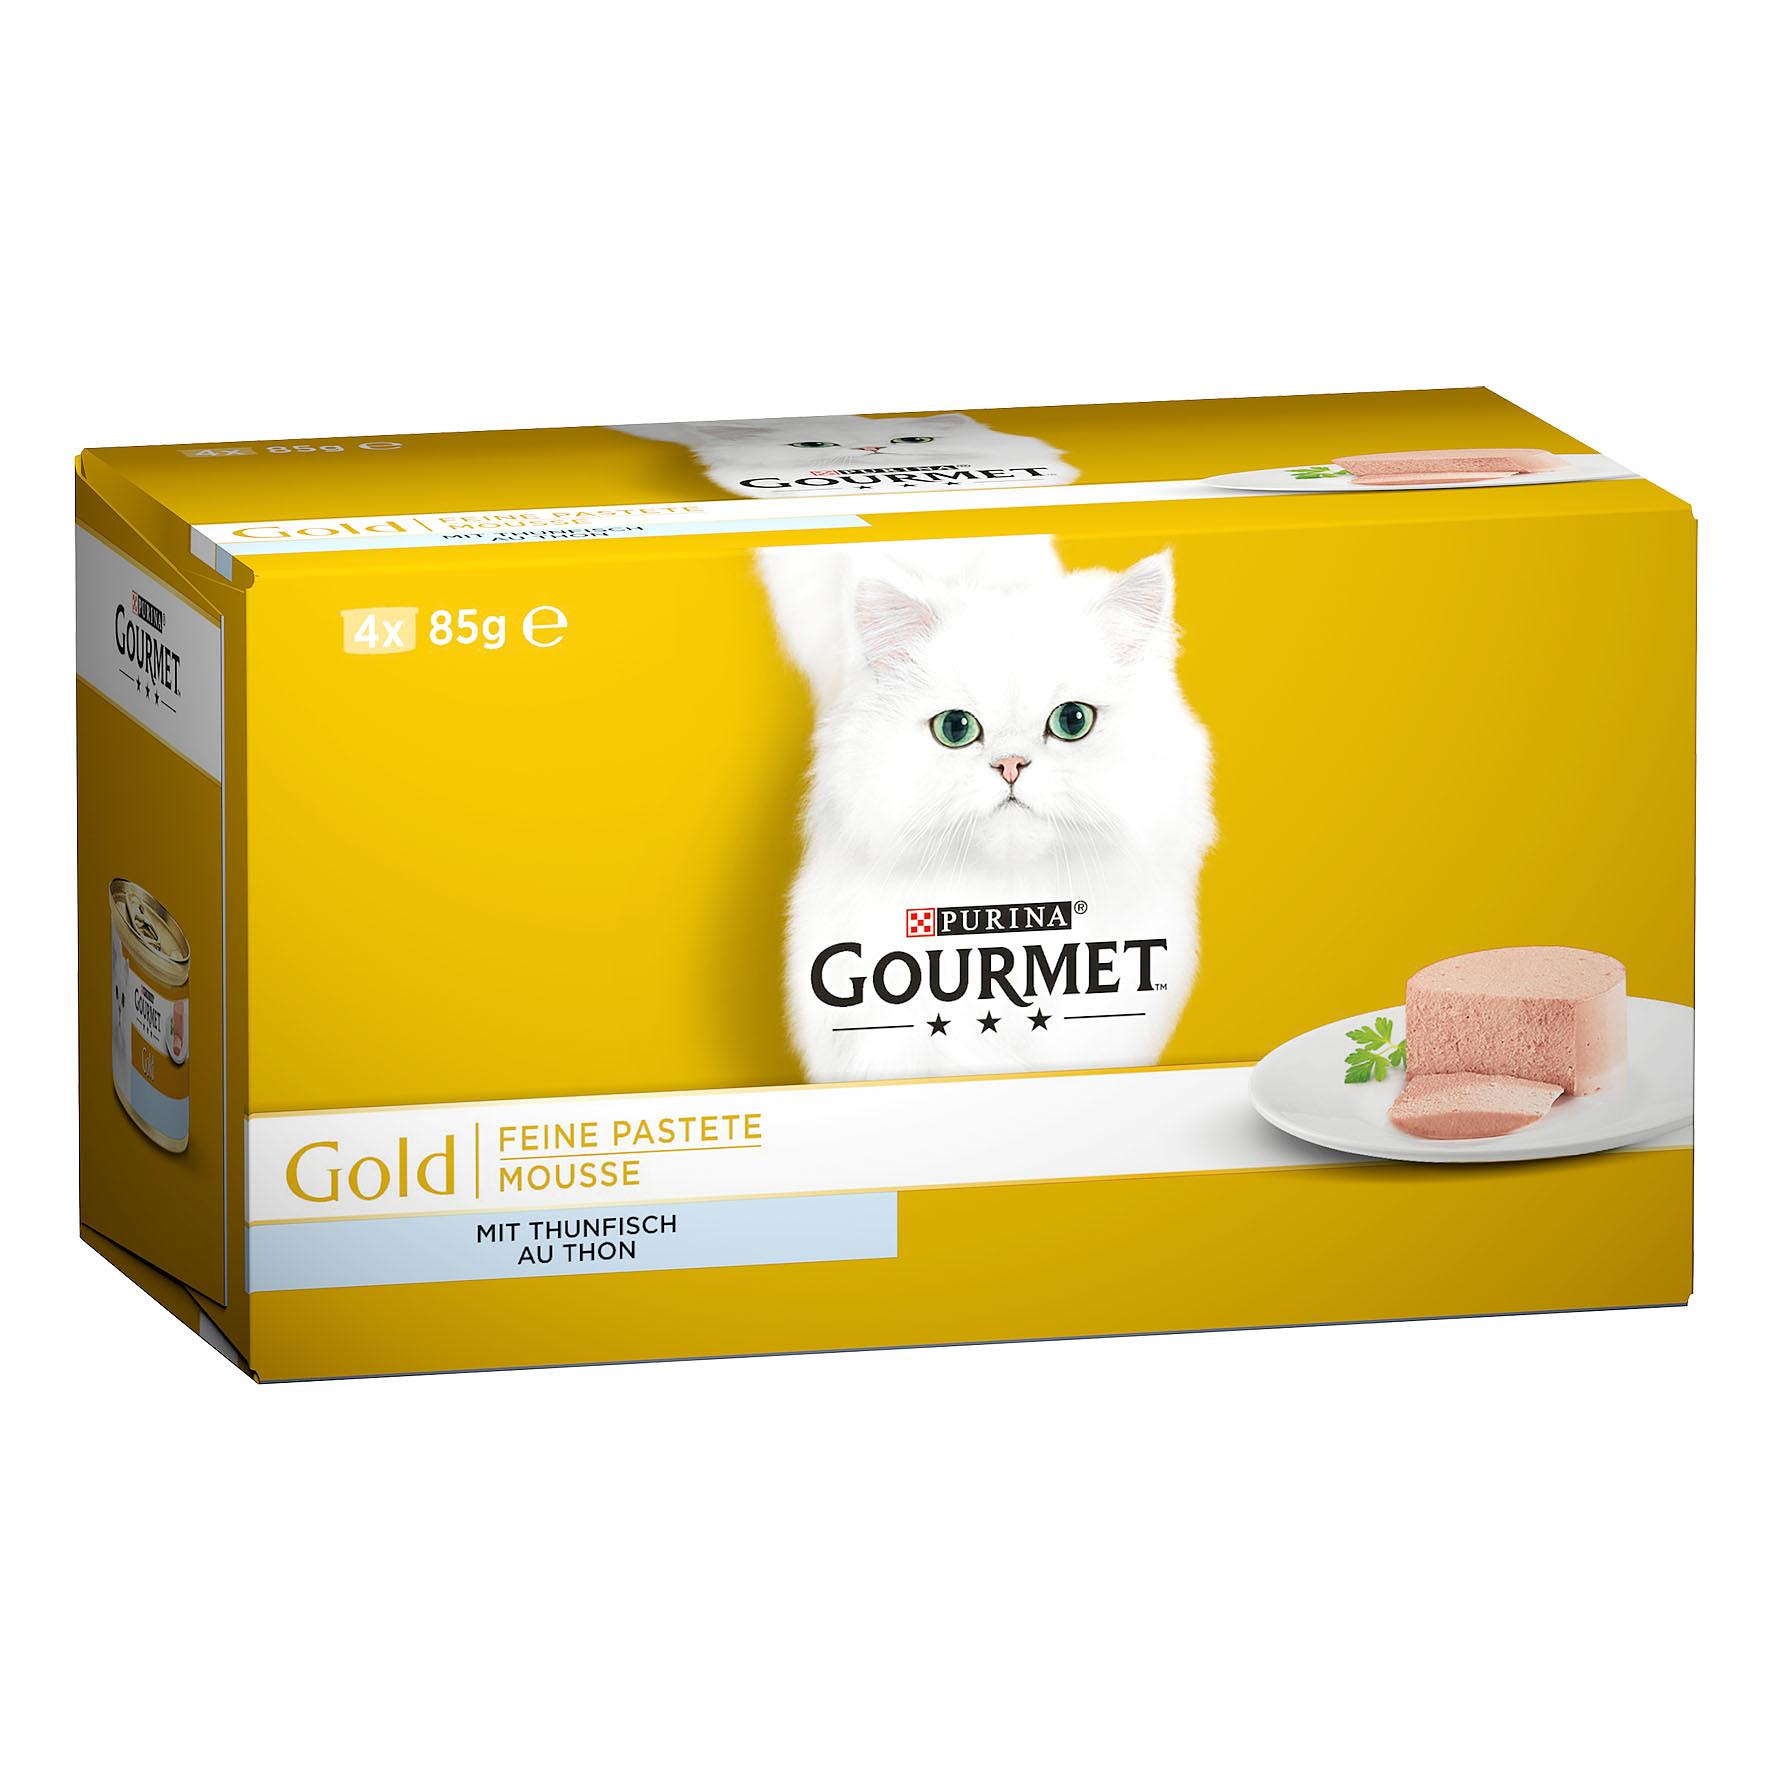 Gourmet Gold Pâté fin au thon, 4x85g